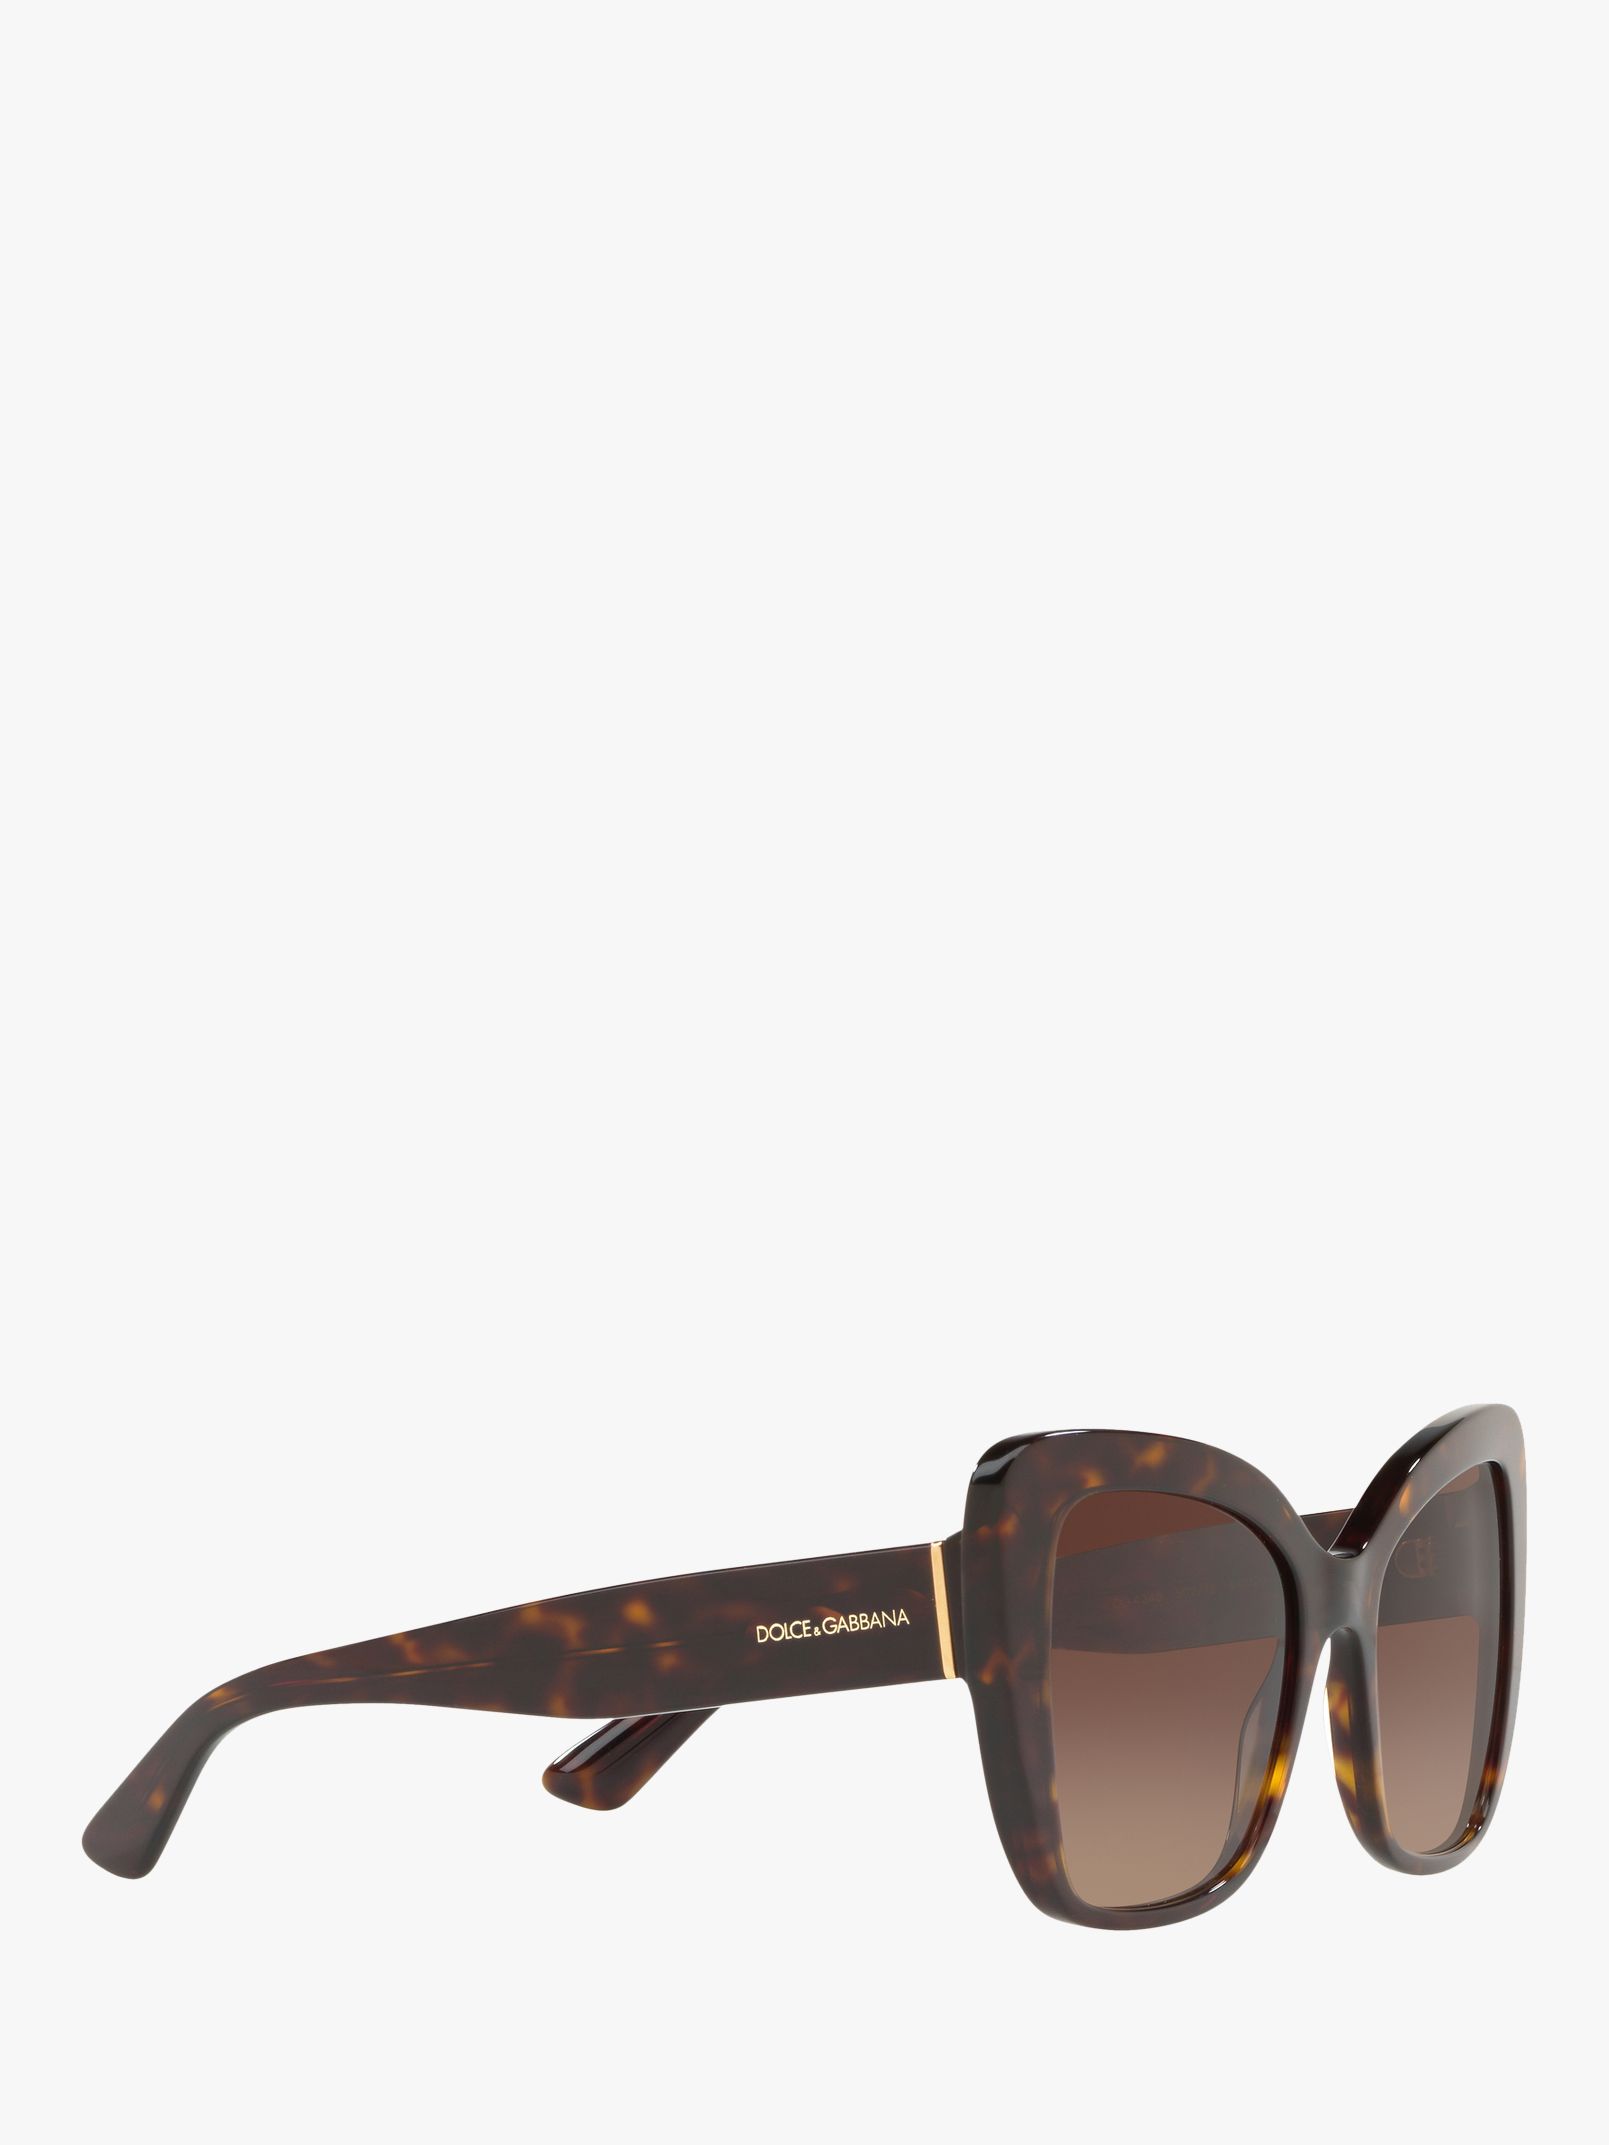 Dolce & Gabbana DG4348 Women's Cat's Eye Sunglasses, Tortoise/Brown  Gradient at John Lewis & Partners